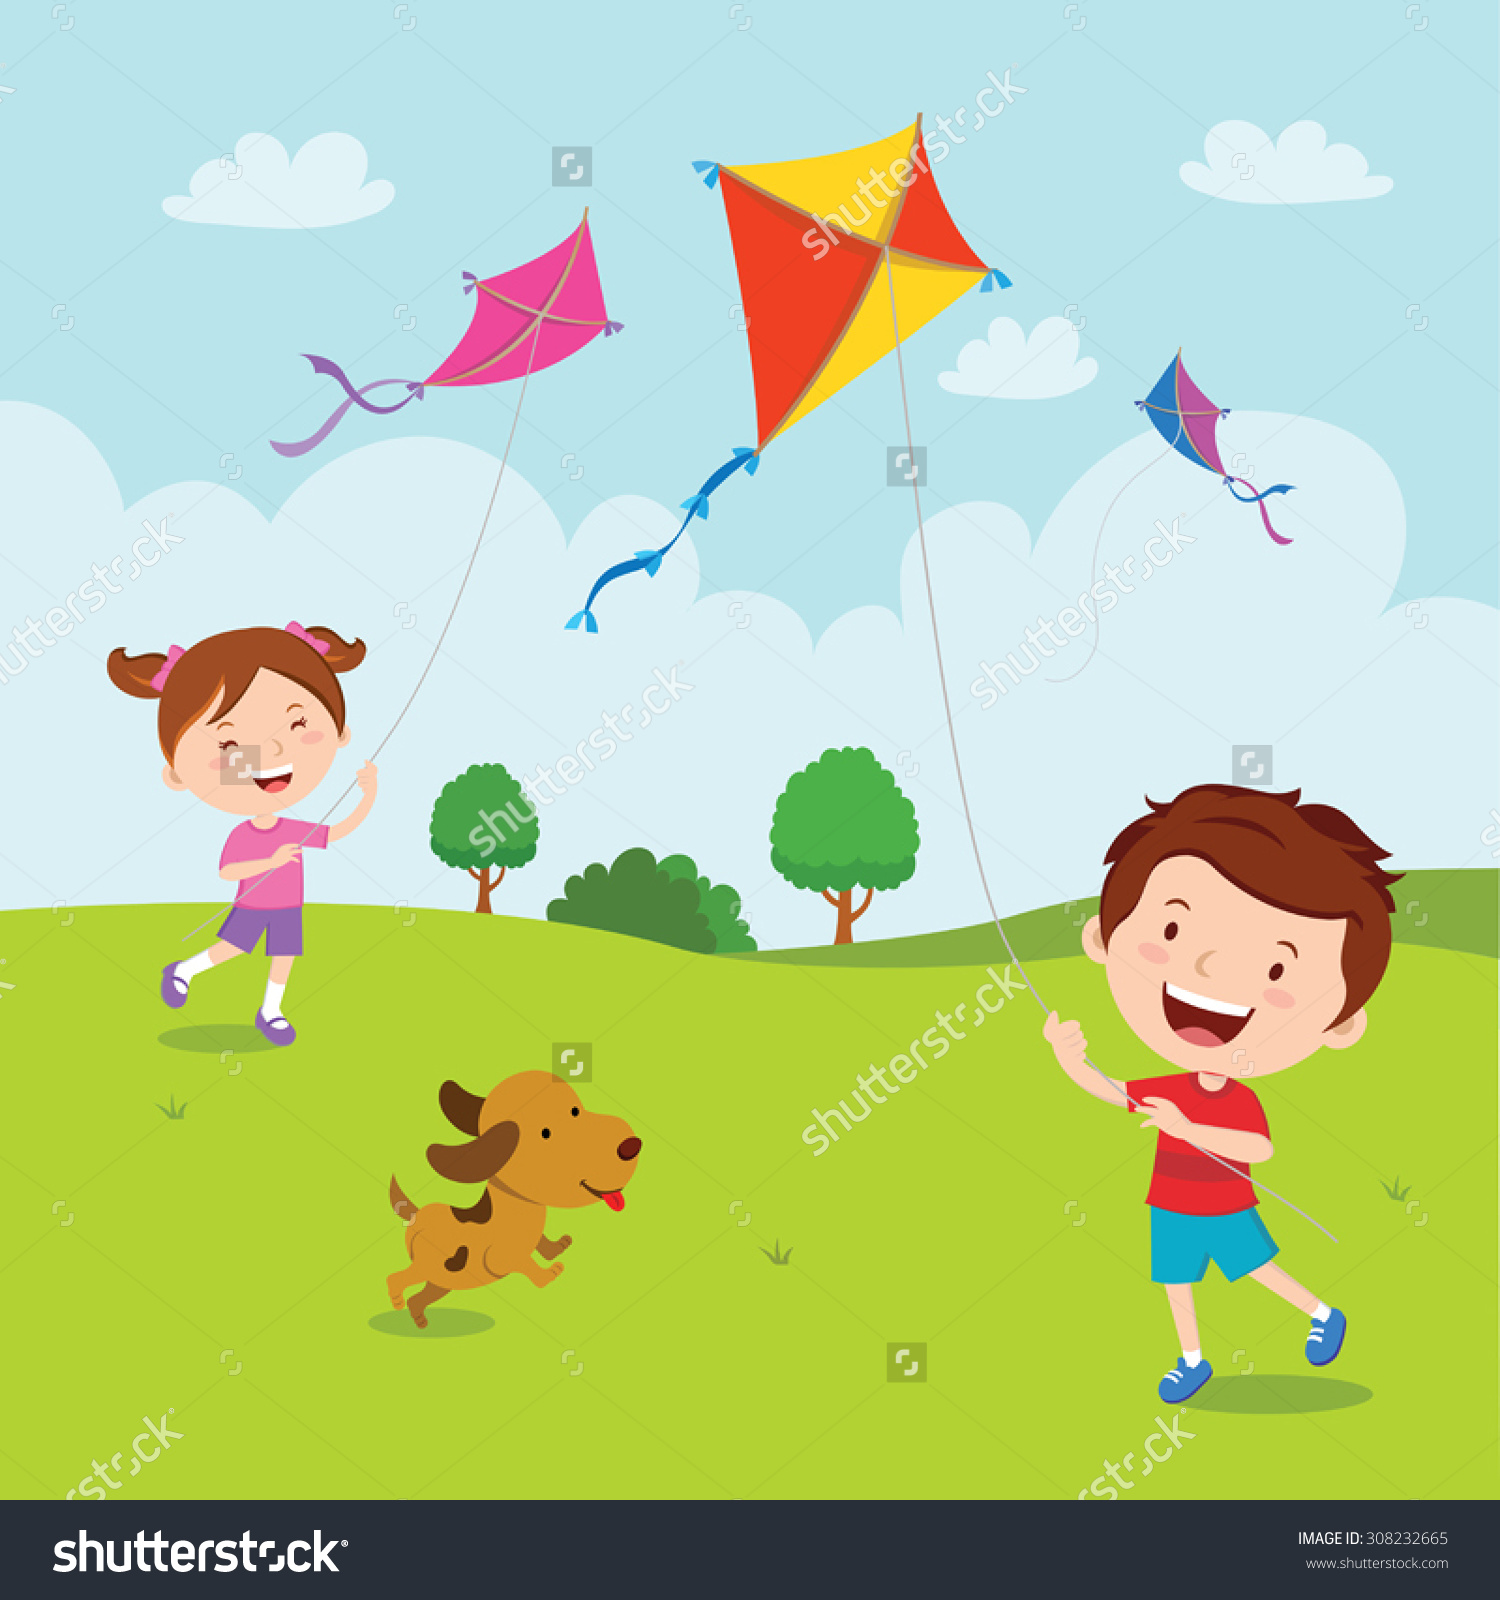 fly a kite cartoon